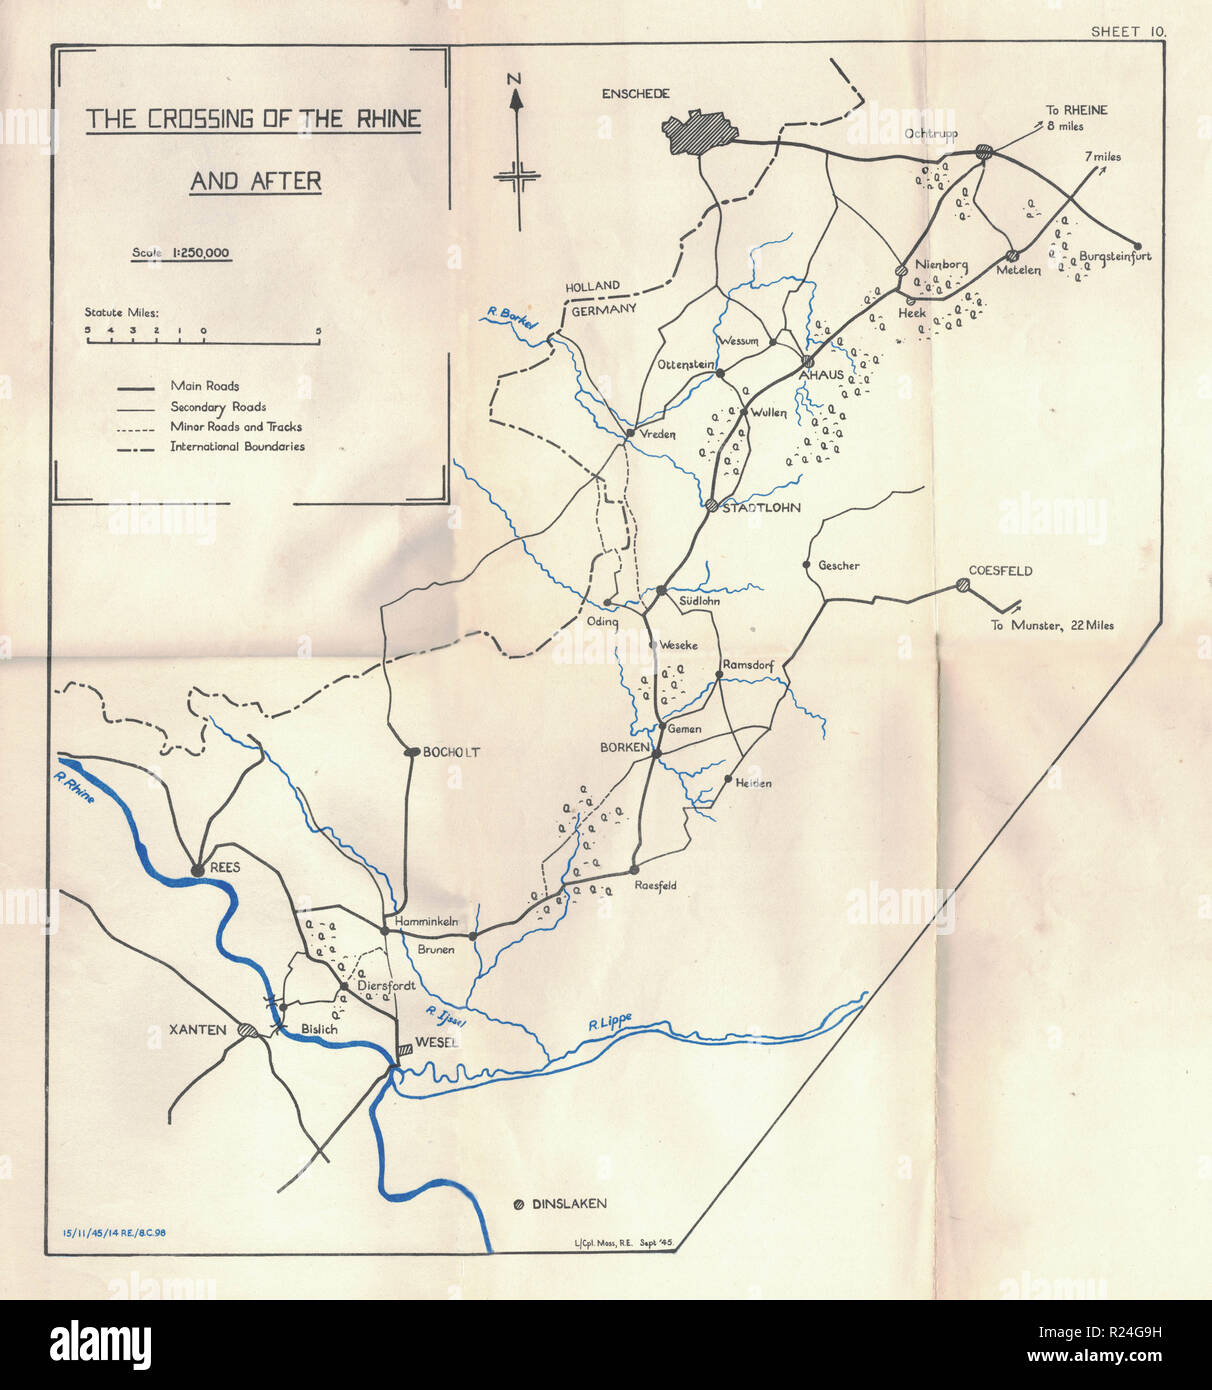 World War 2 European Campaign Maps 1945, Crossing the Rhine Stock Photo